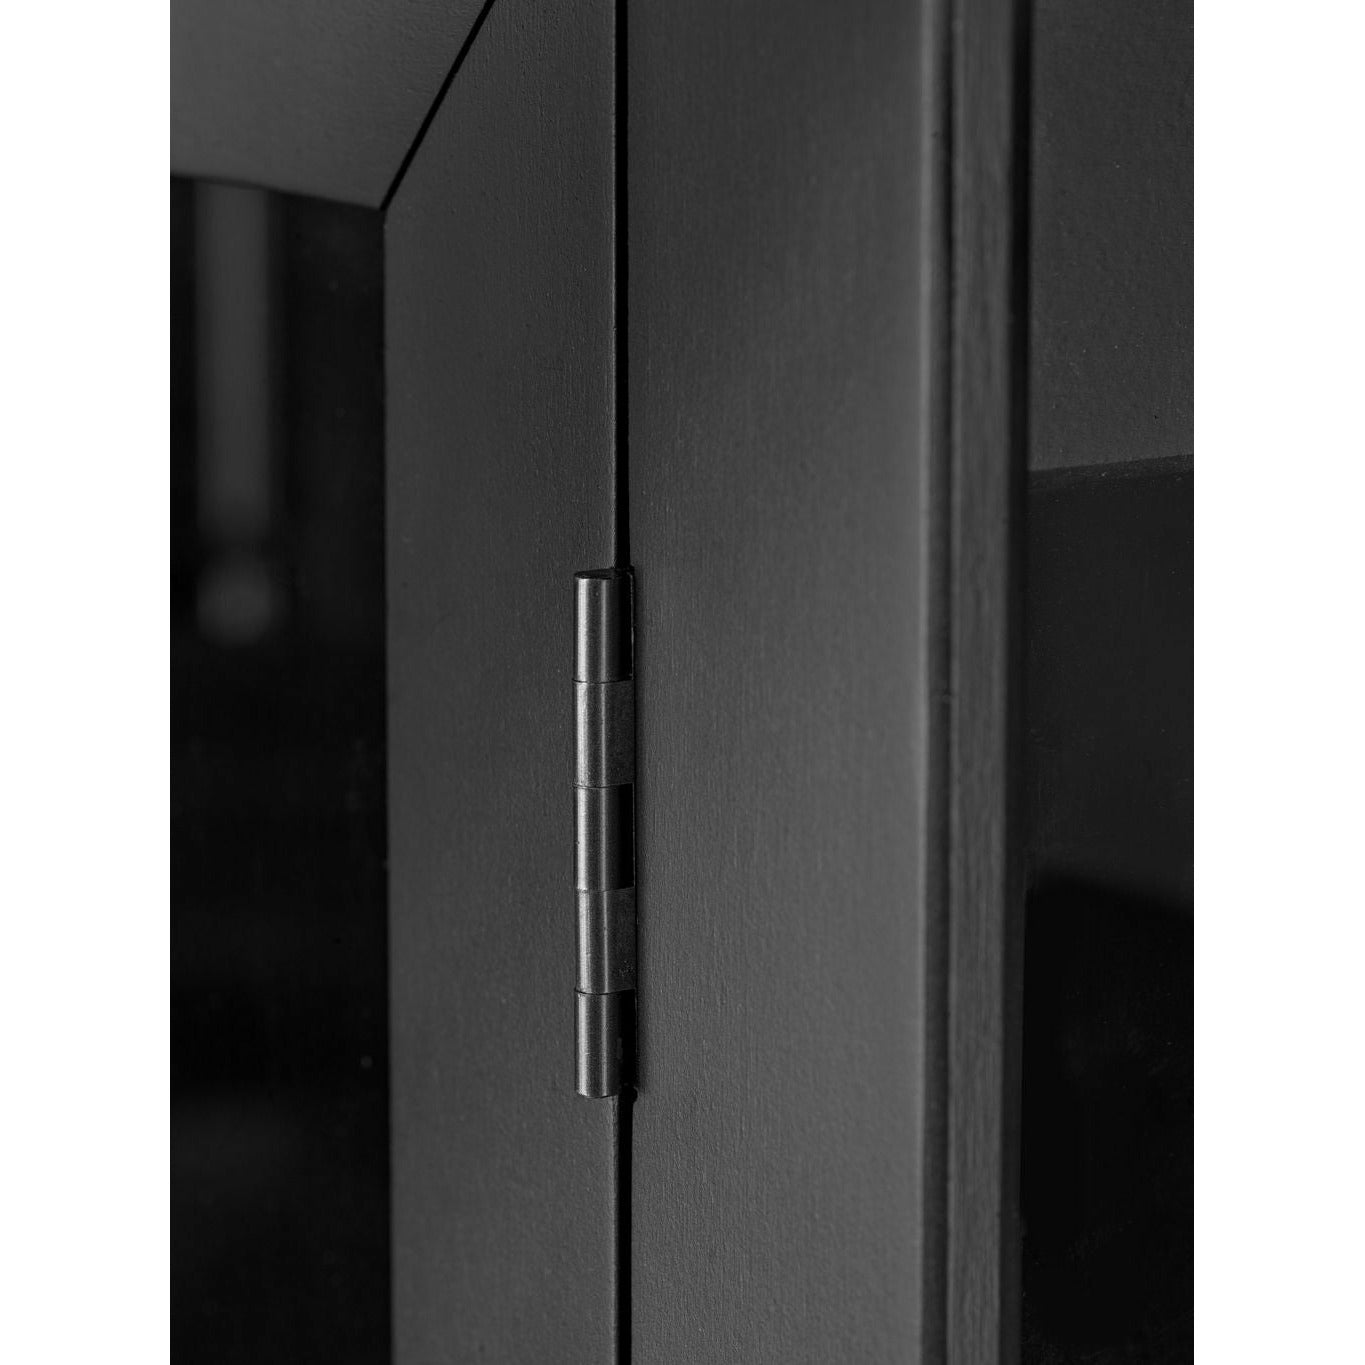 FDB Møbler A90 Boderne Display Cabinet Buk Beech Black Lacquered, H: 127 cm